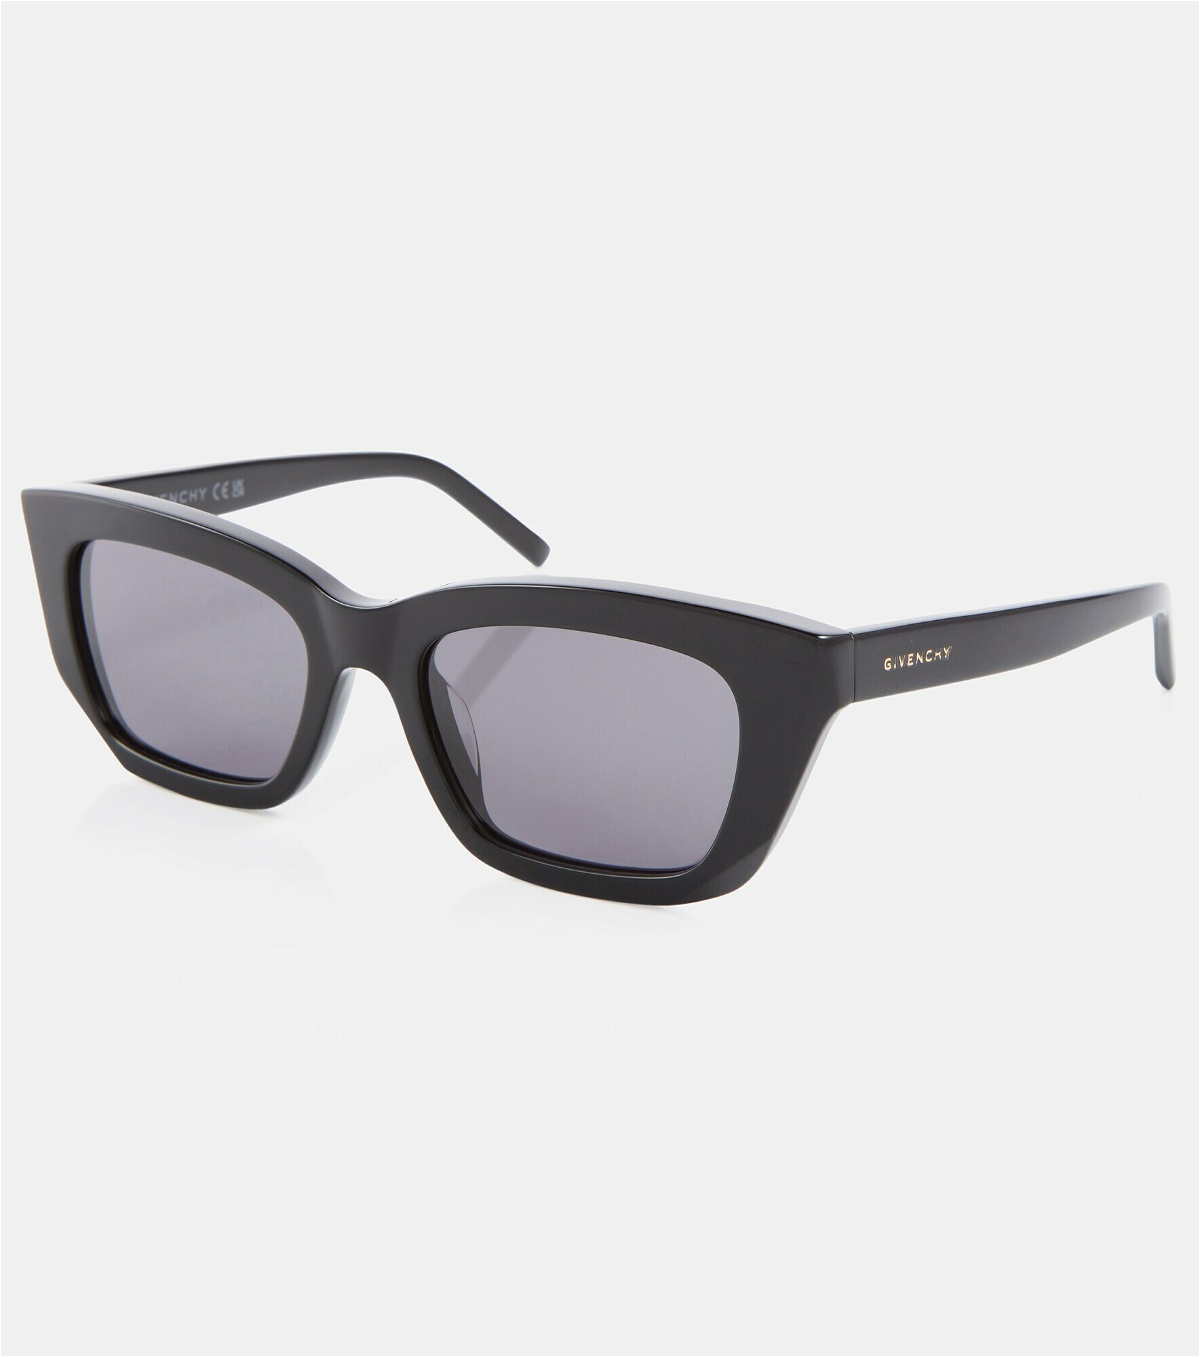 Givenchy - GV Day cat-eye sunglasses Givenchy